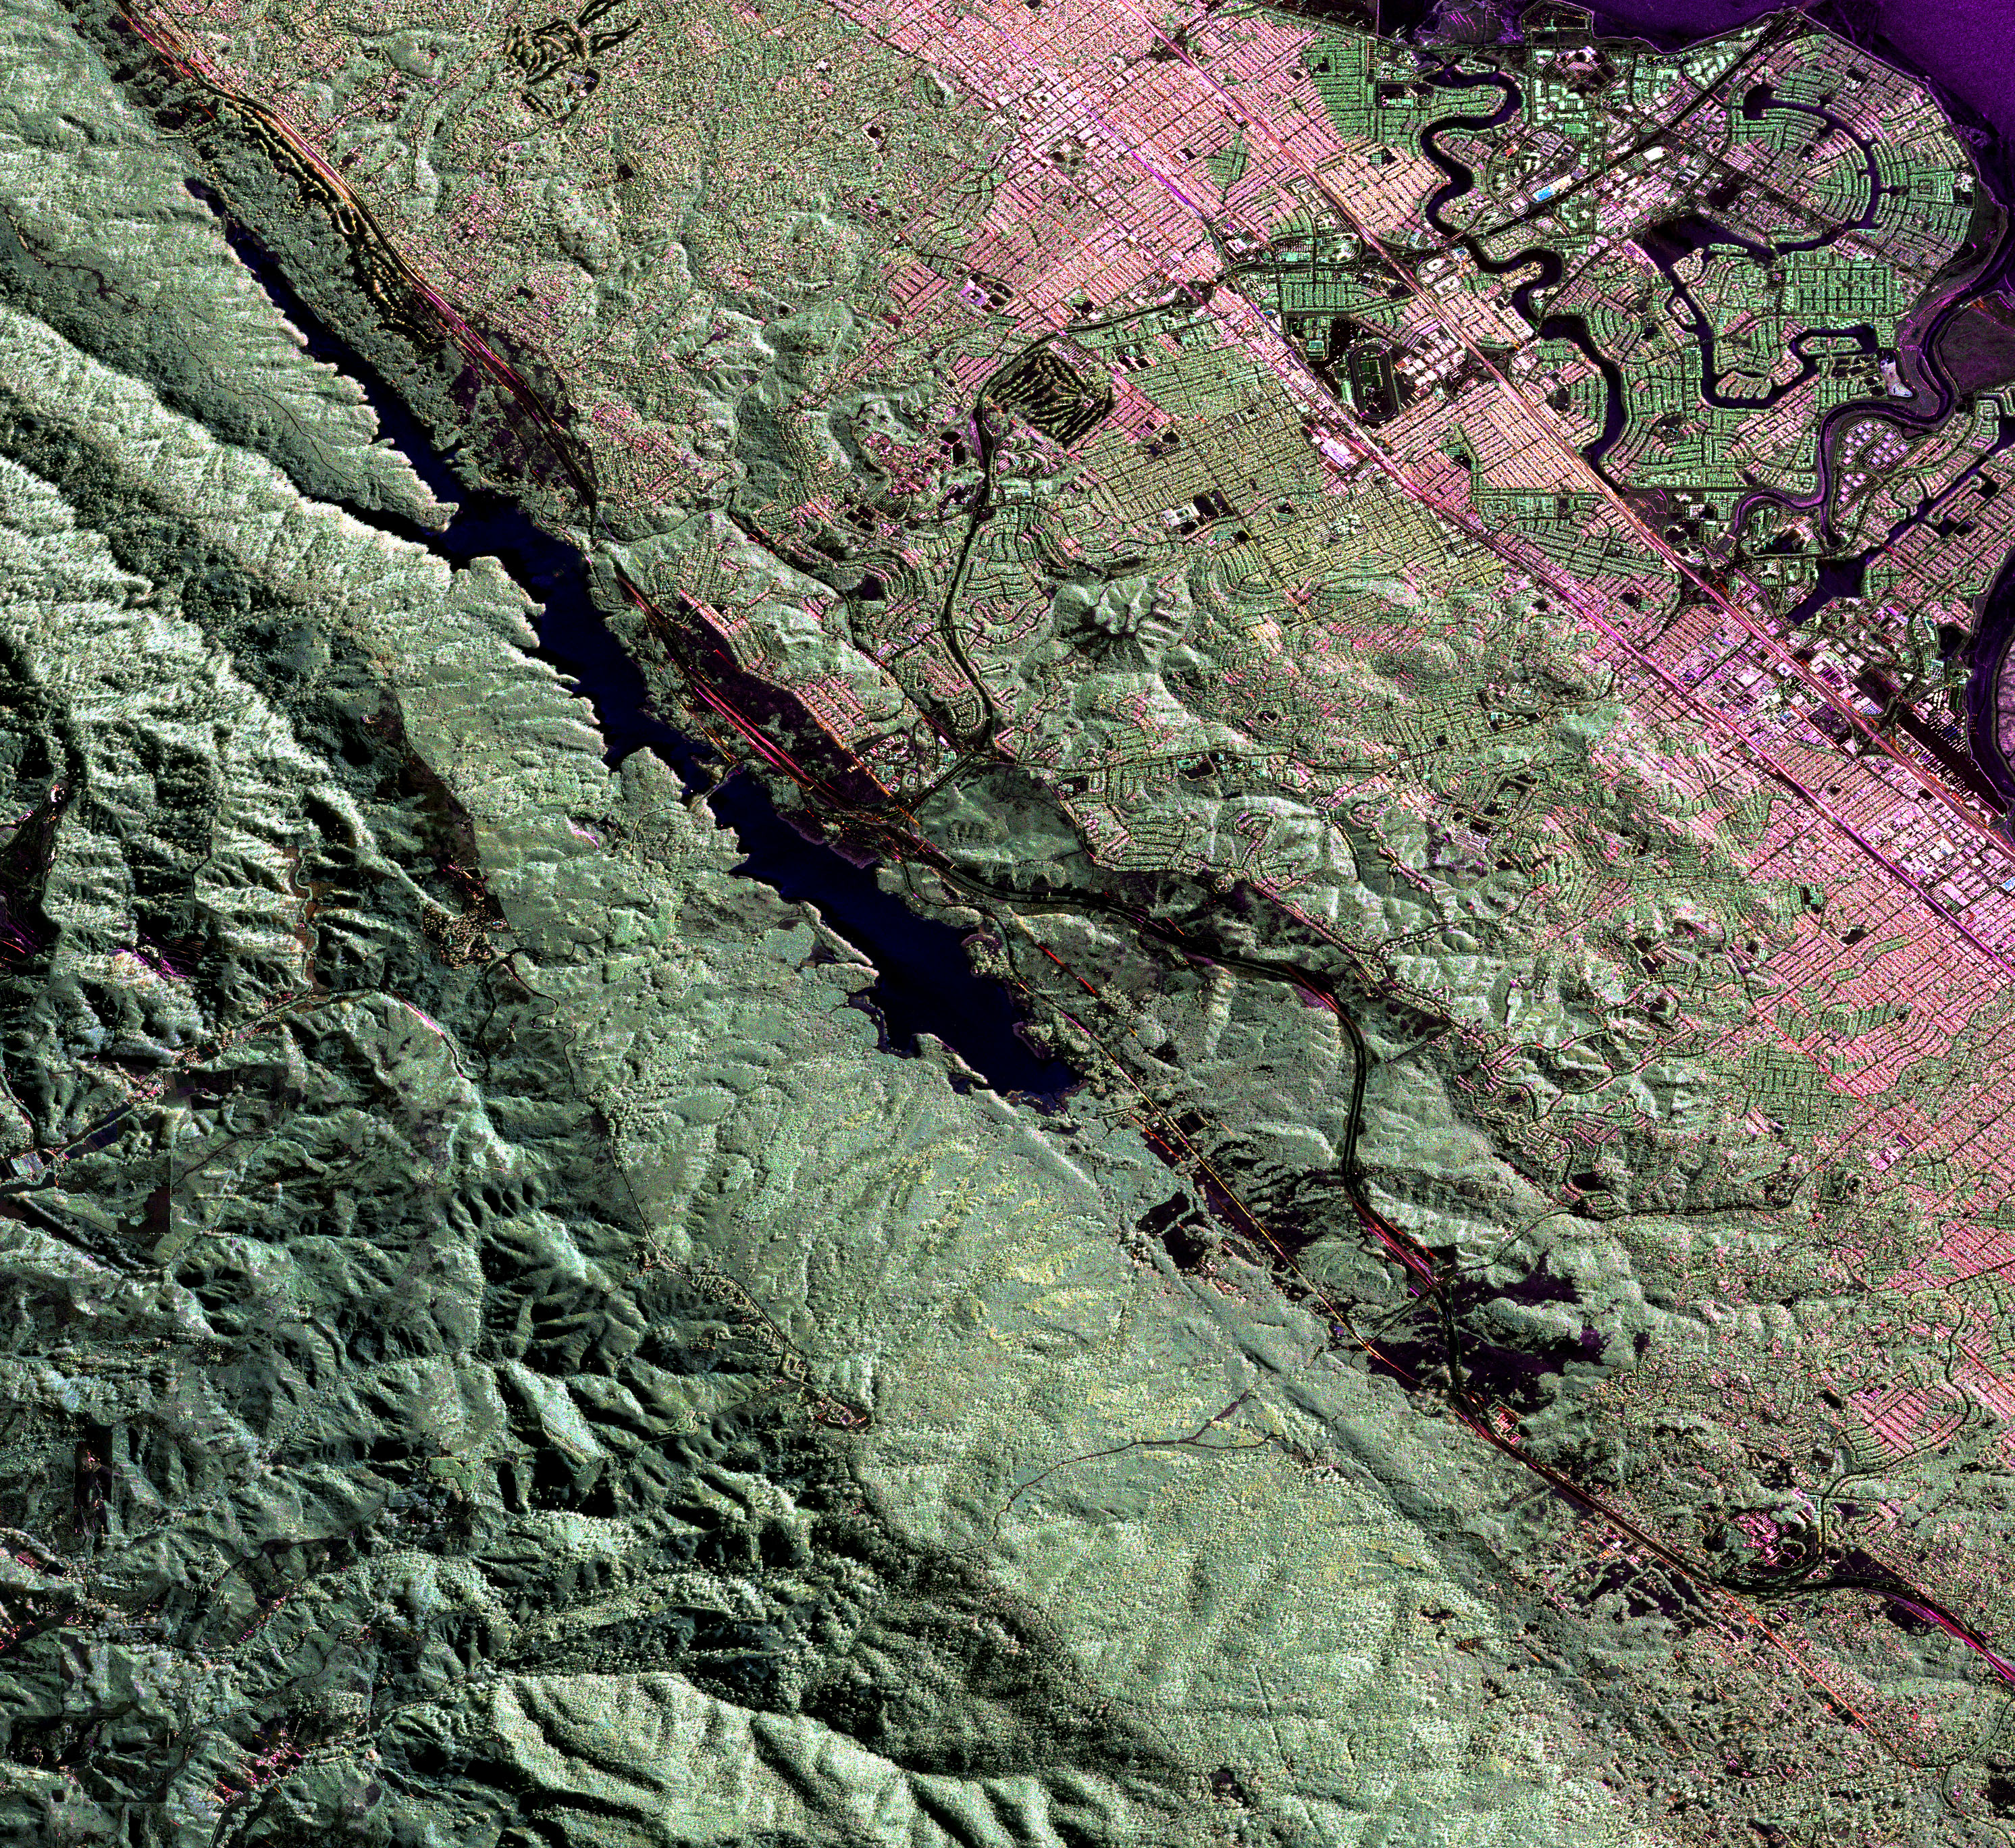 NASA Radar 3-D View of San Andreas Fault